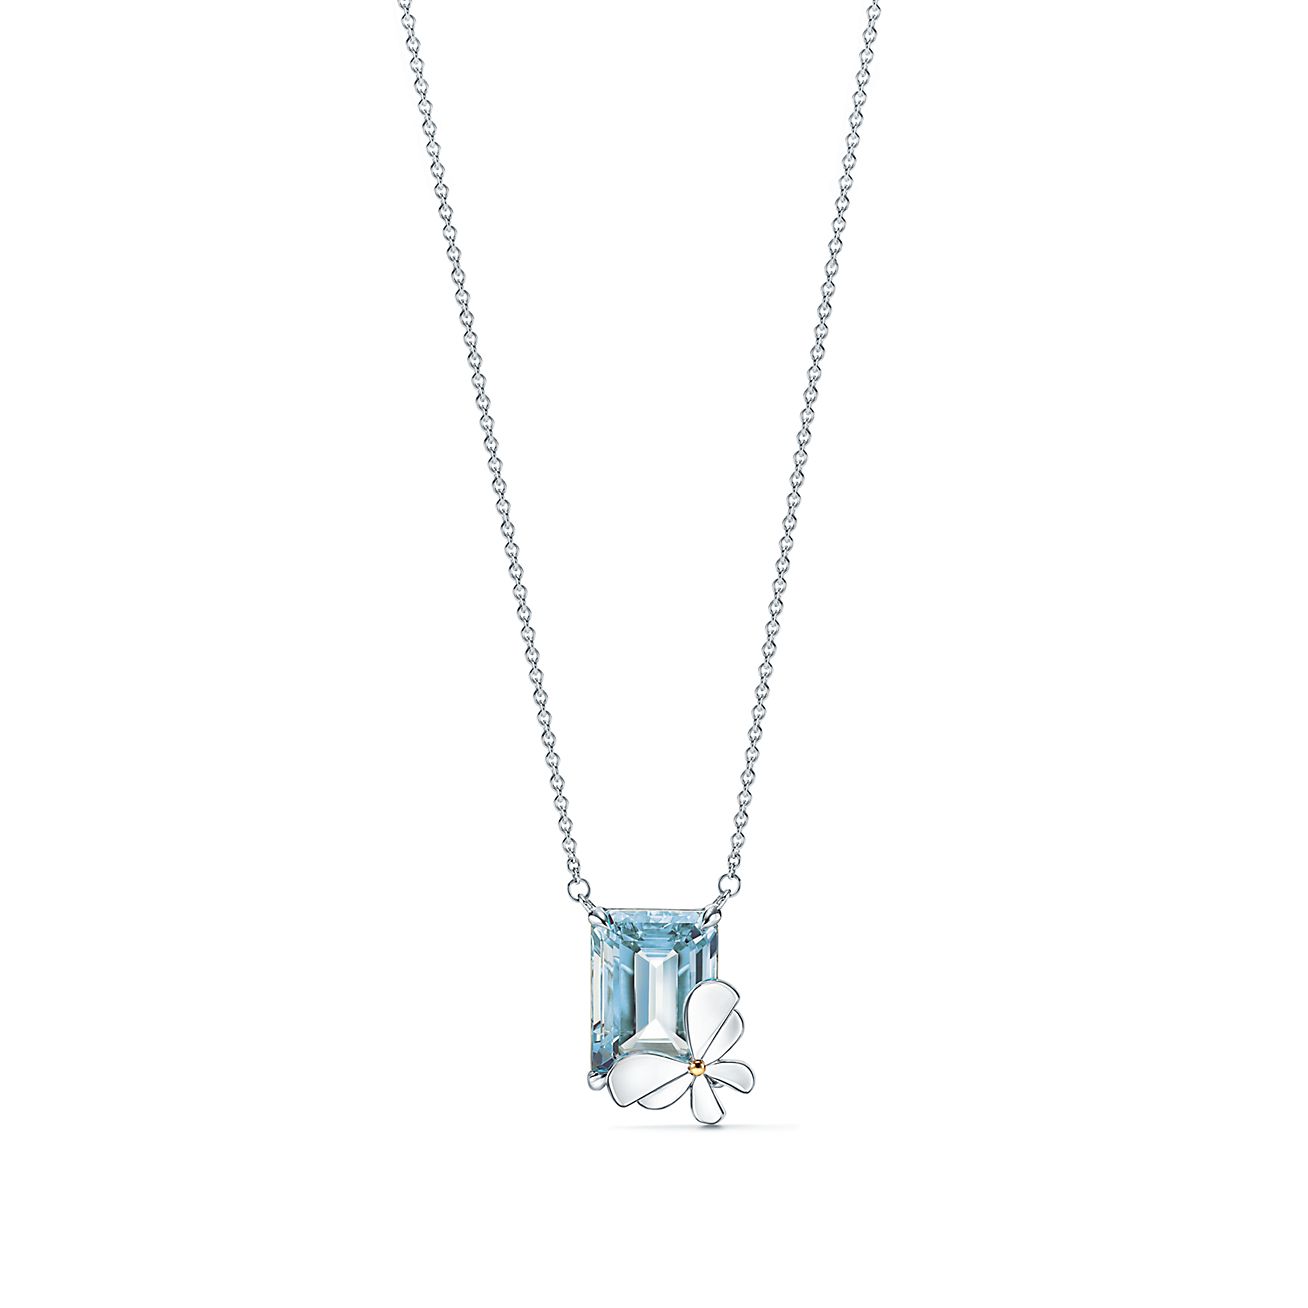 Details 127+ blue topaz butterfly necklace latest